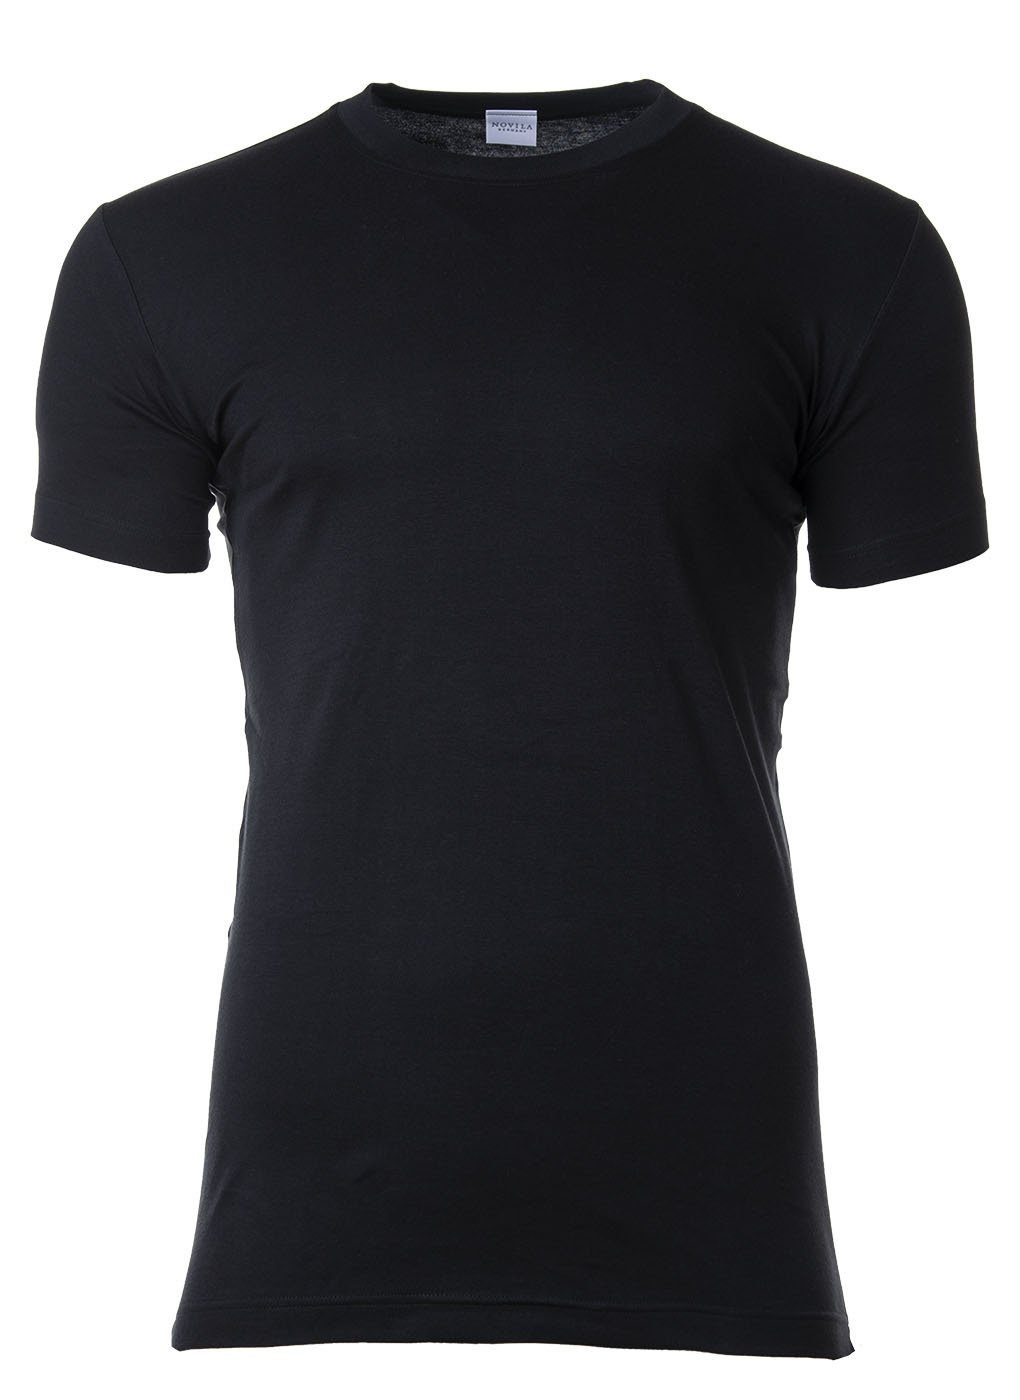 Herren Comfort American-Shirt - Rundhals, Novila T-Shirt Natural Schwarz